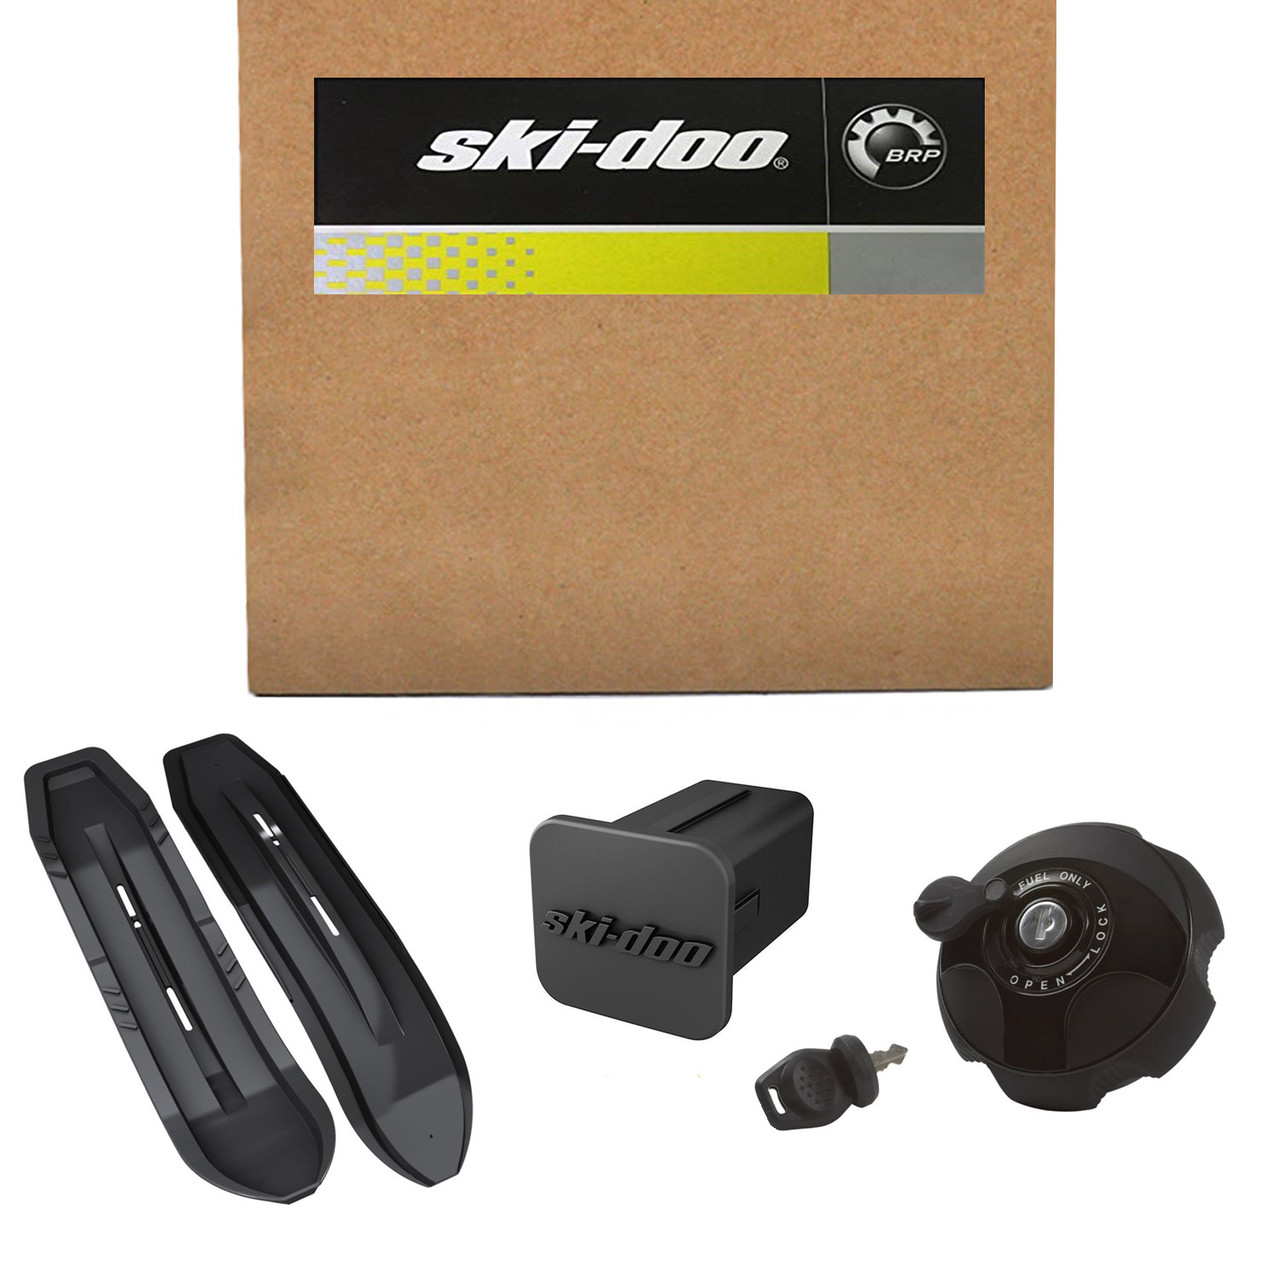 Ski-Doo New OEM Console Black, 517305609